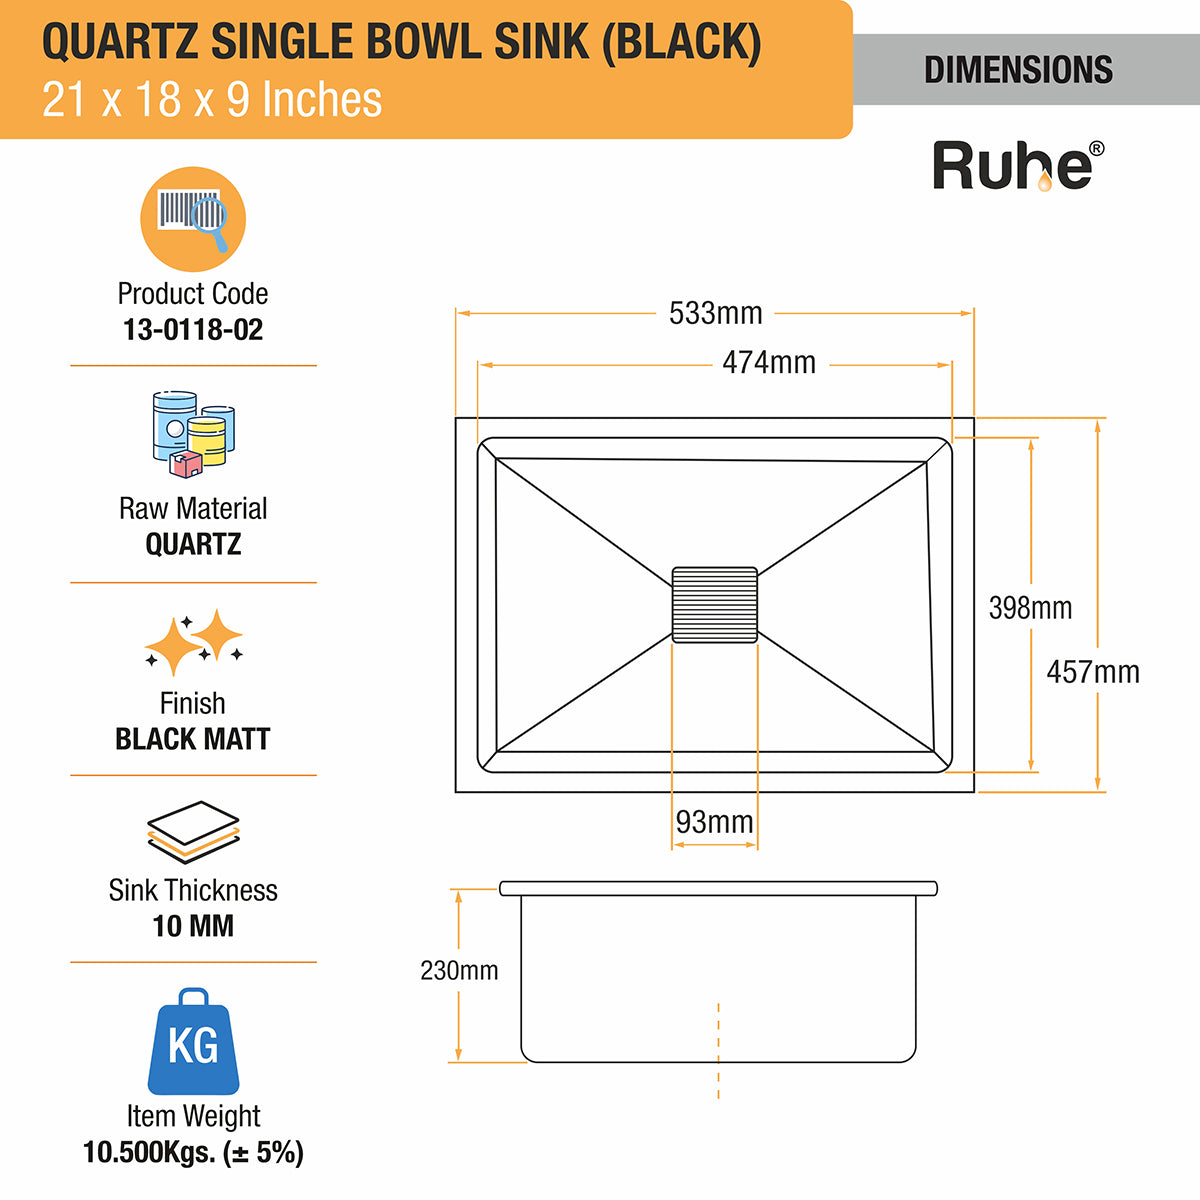 Quartz Black Single Bowl Kitchen Sink (21 x 18 x 9 inches) dimensions and sizes